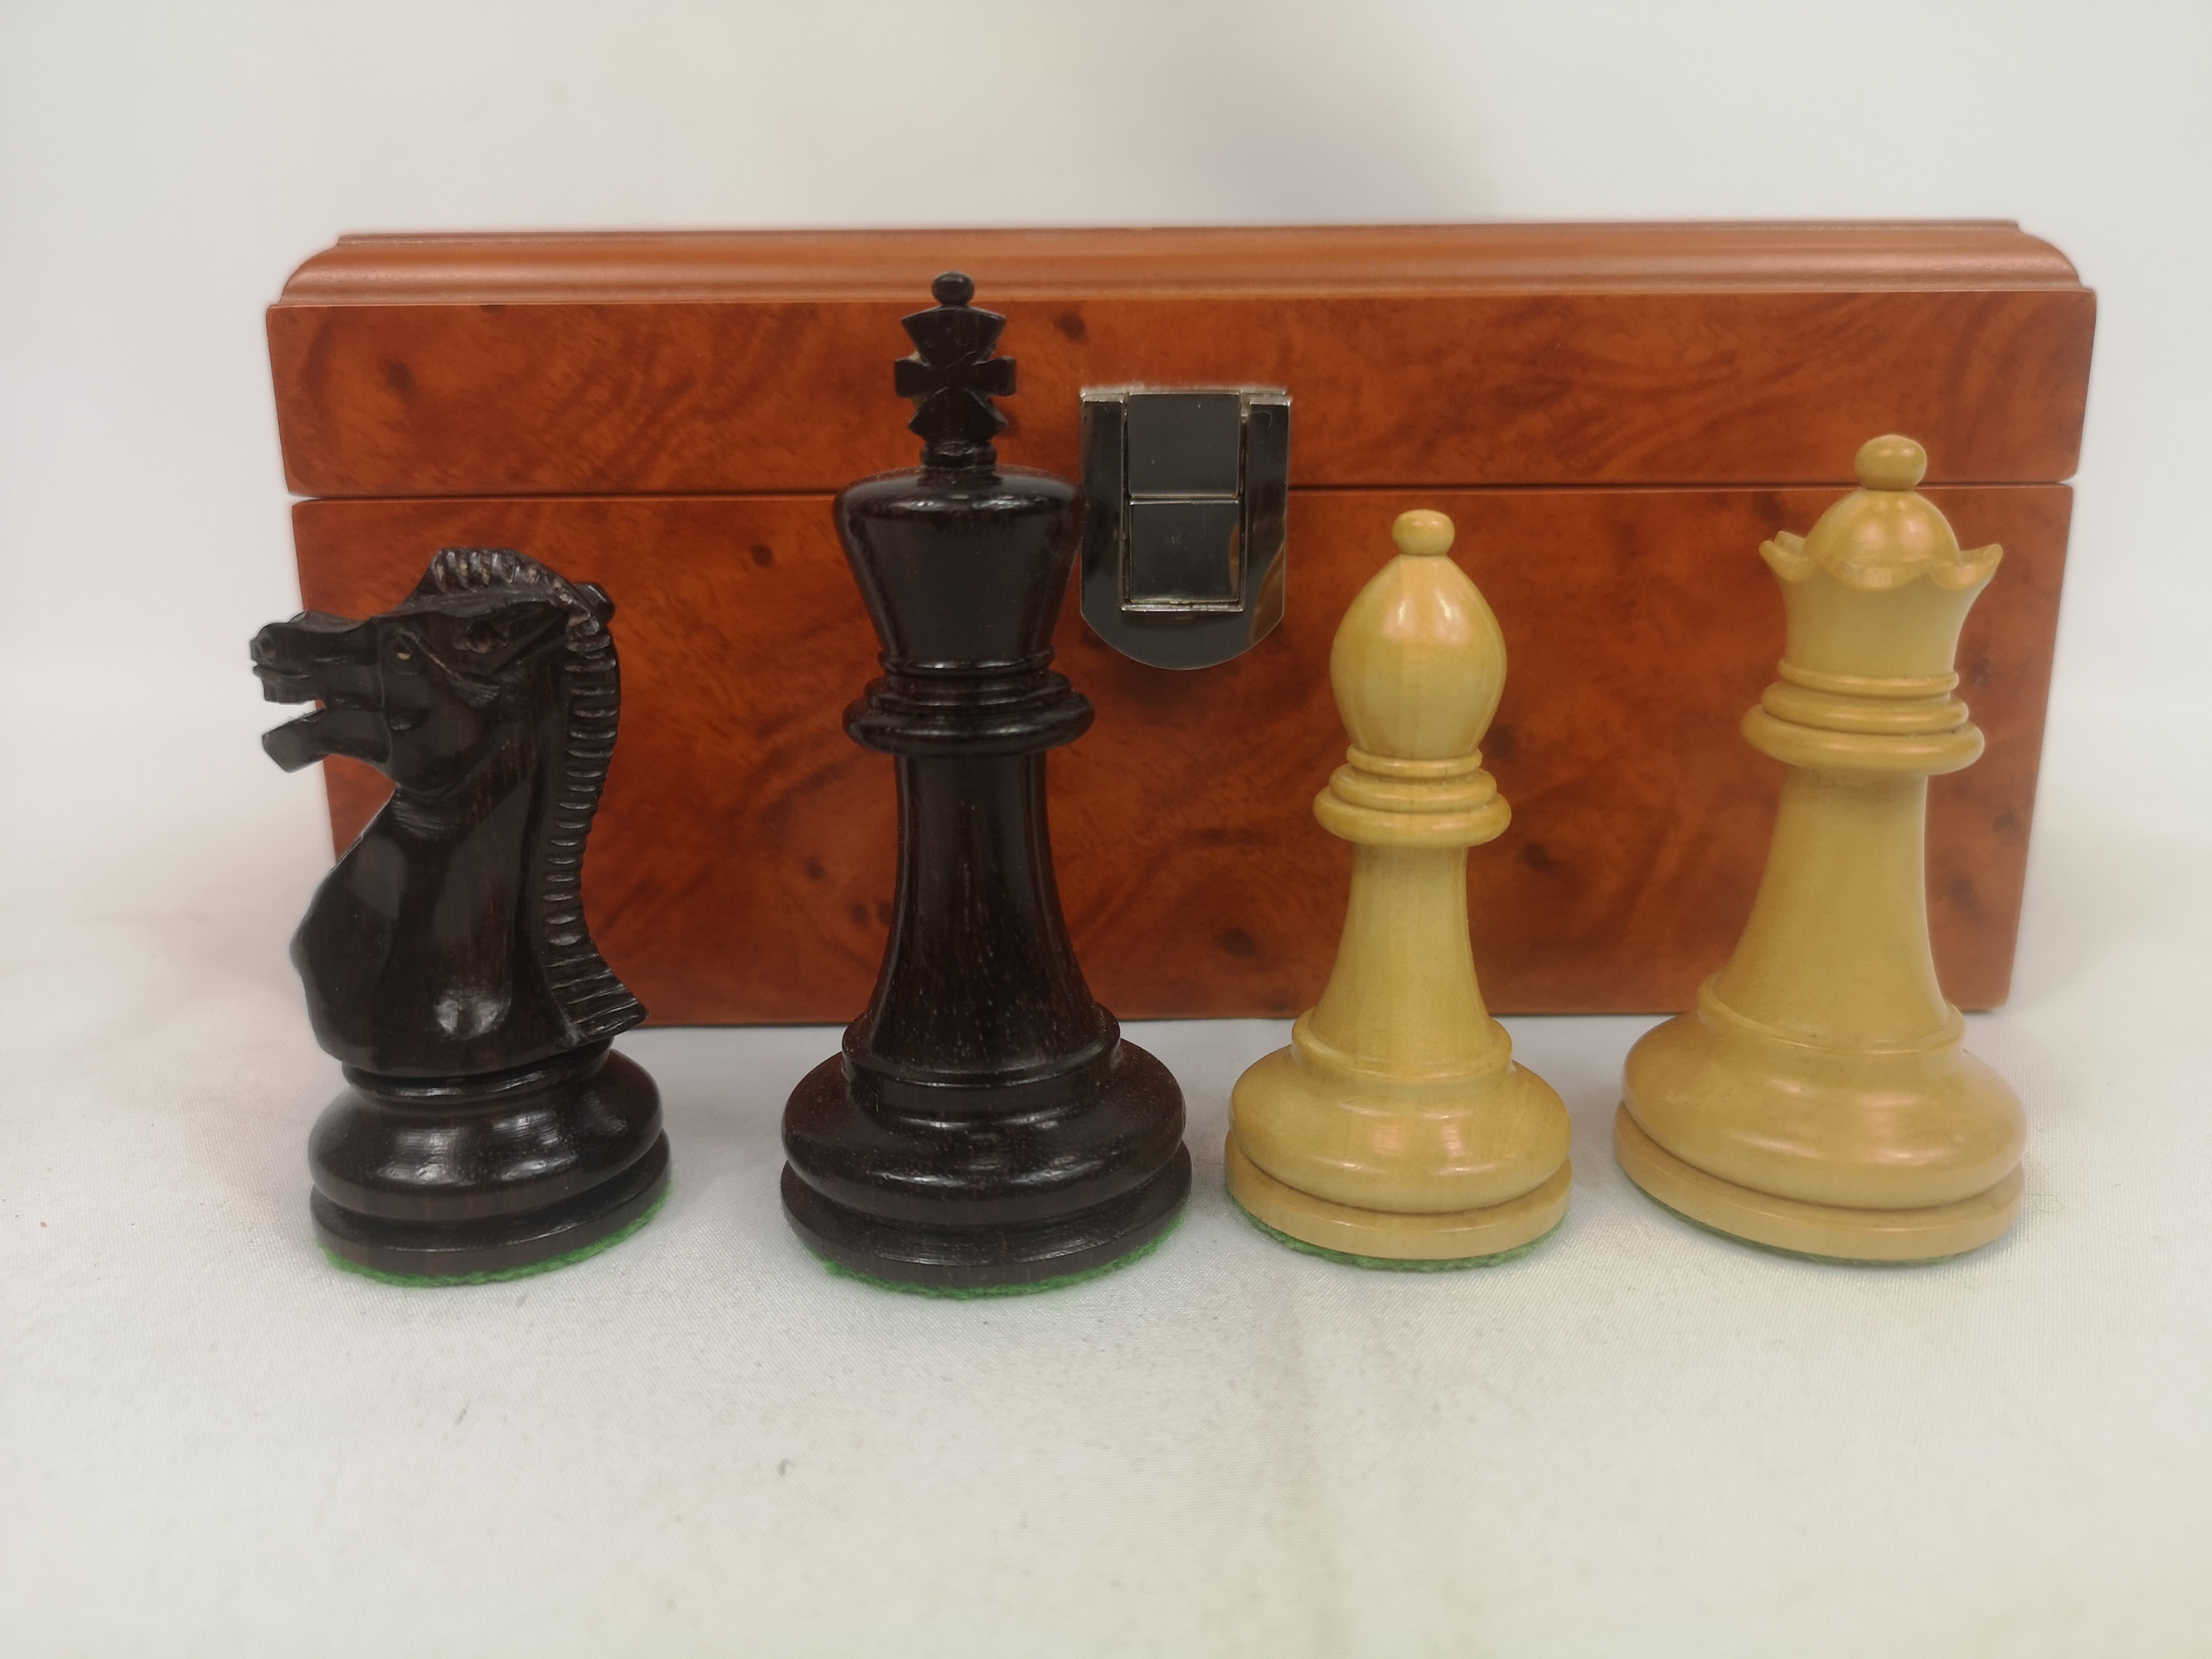 Chopra chess set in box - Image 4 of 4